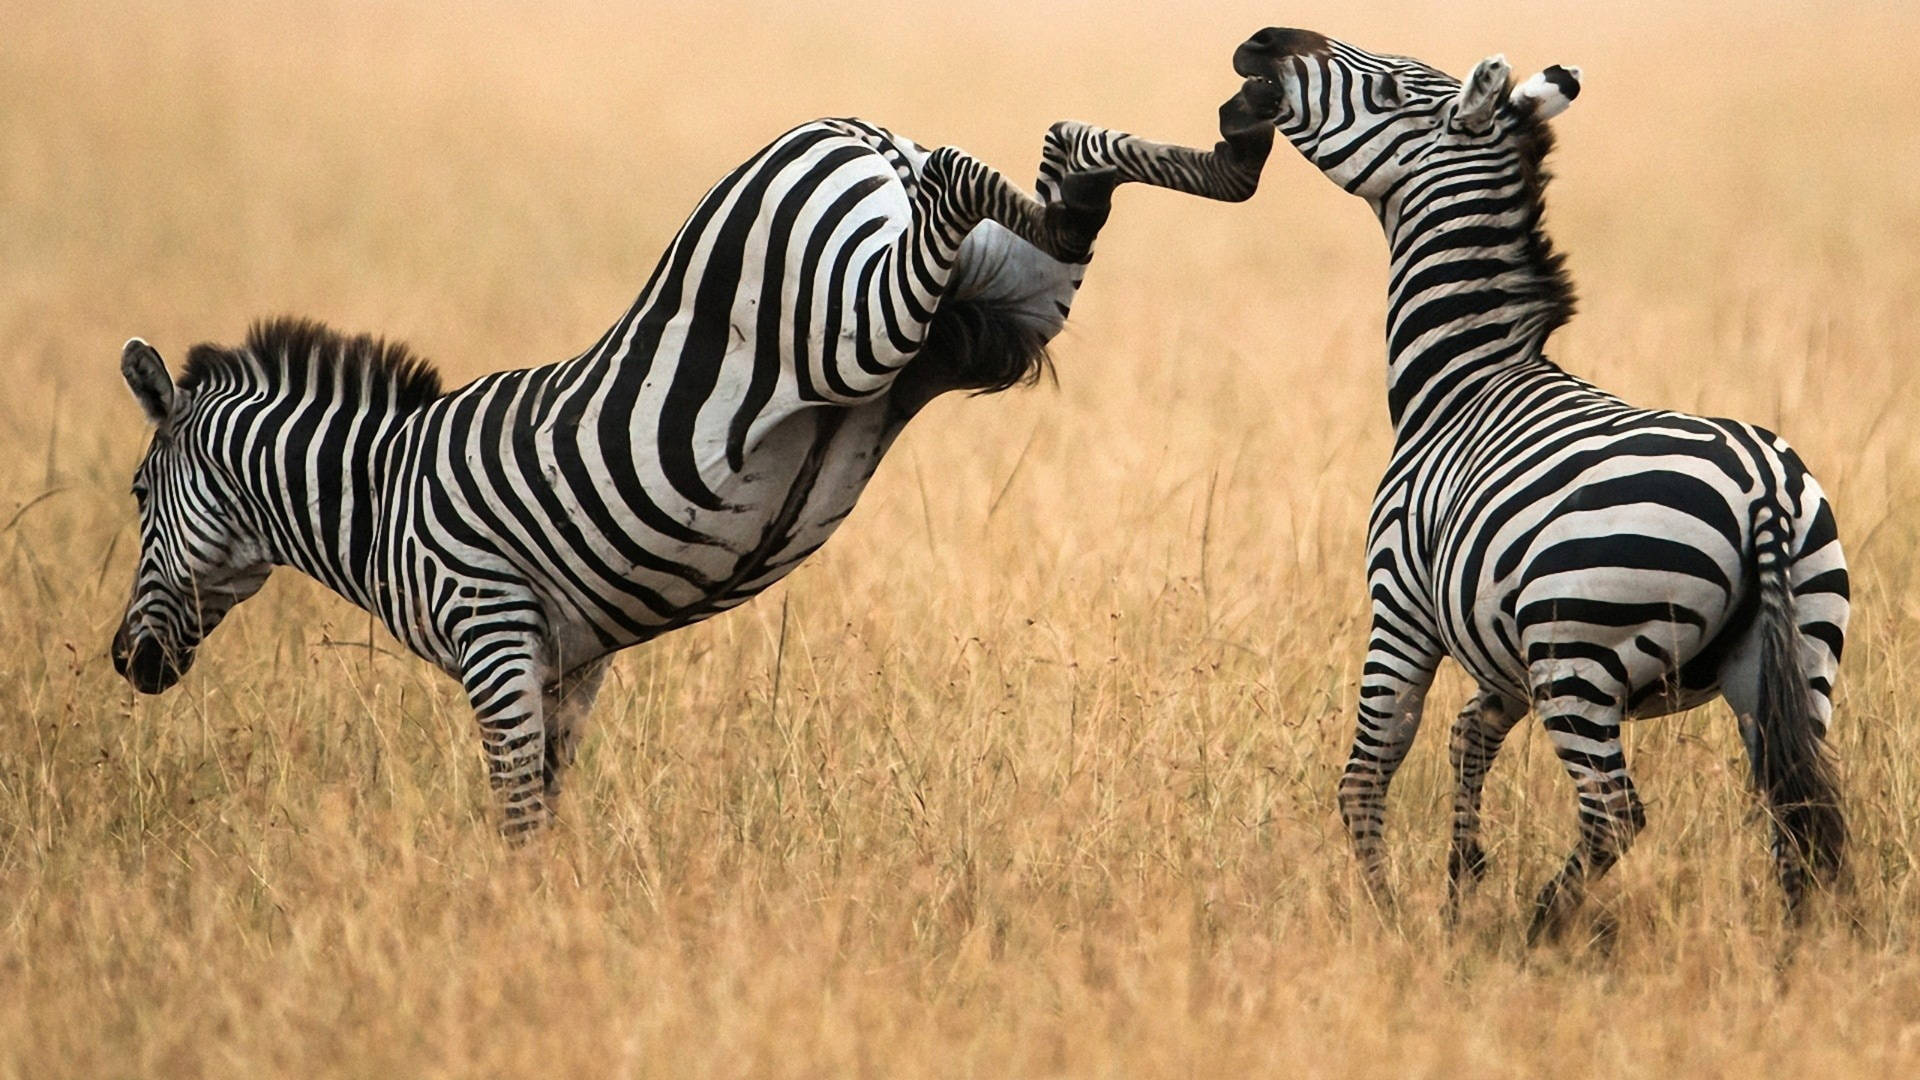 Two Zebras Fighting